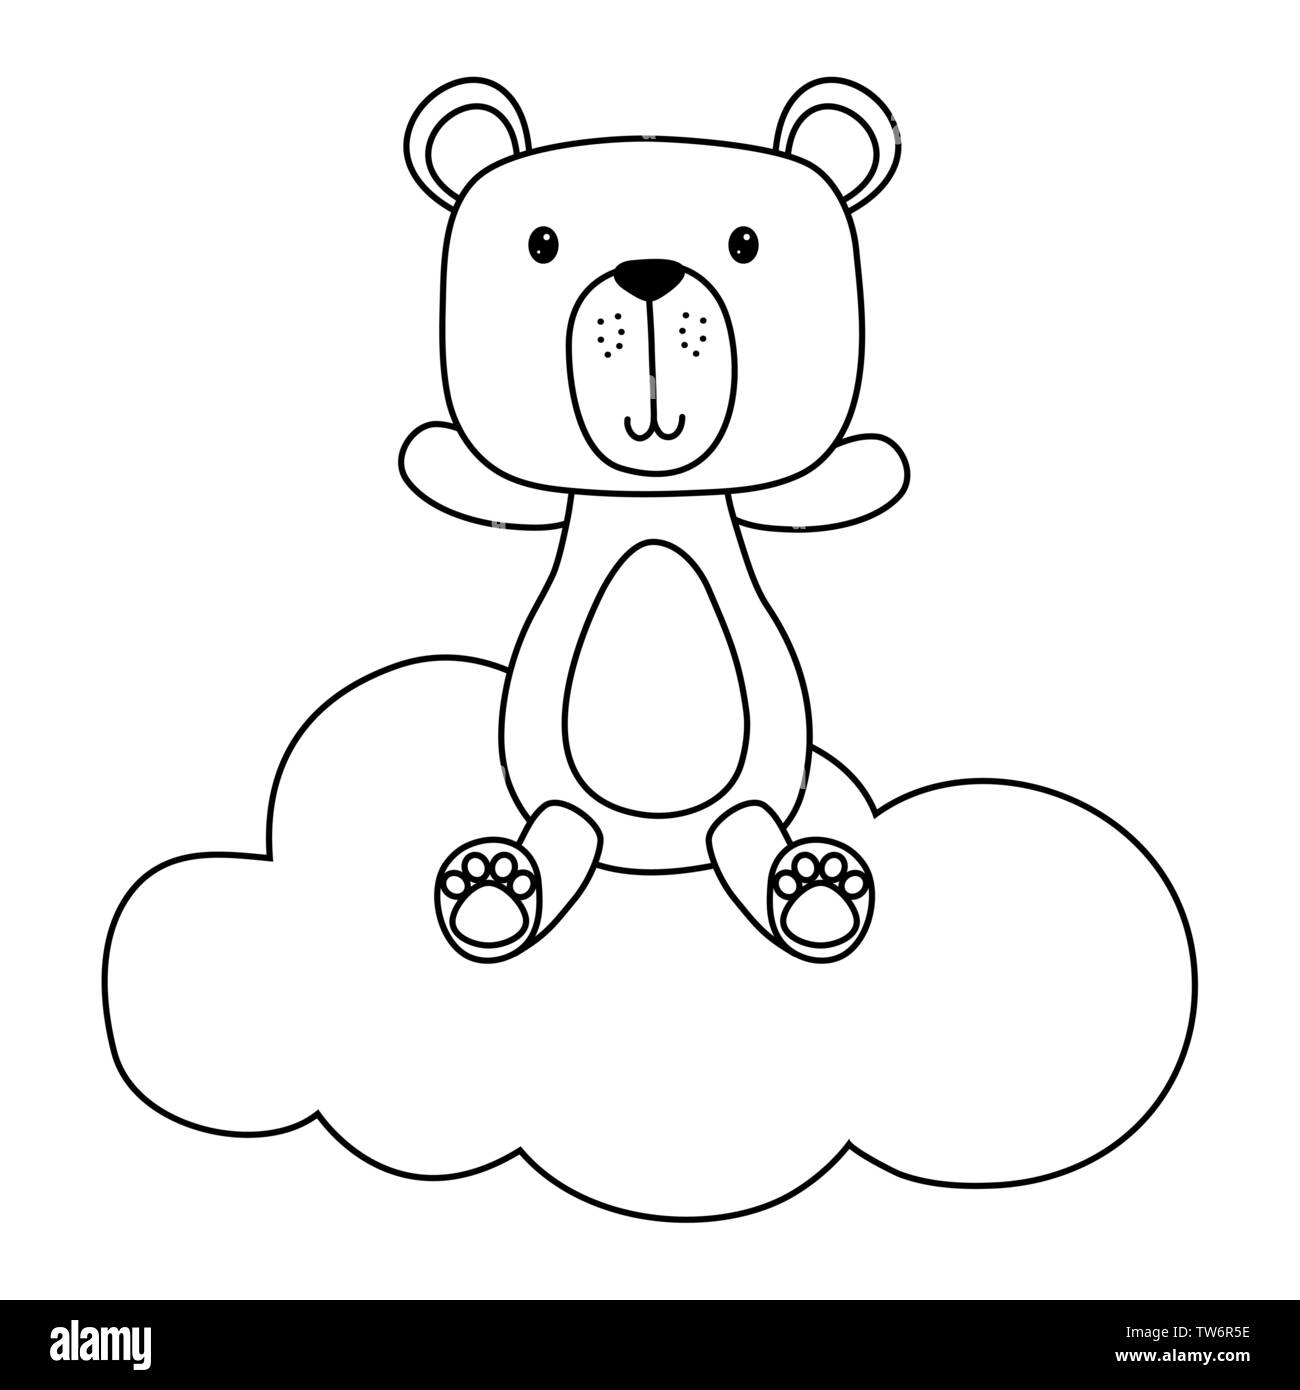 Teddy bear design, Childhood play fun kid cartoon game and object theme Vector illustration Stock Vector